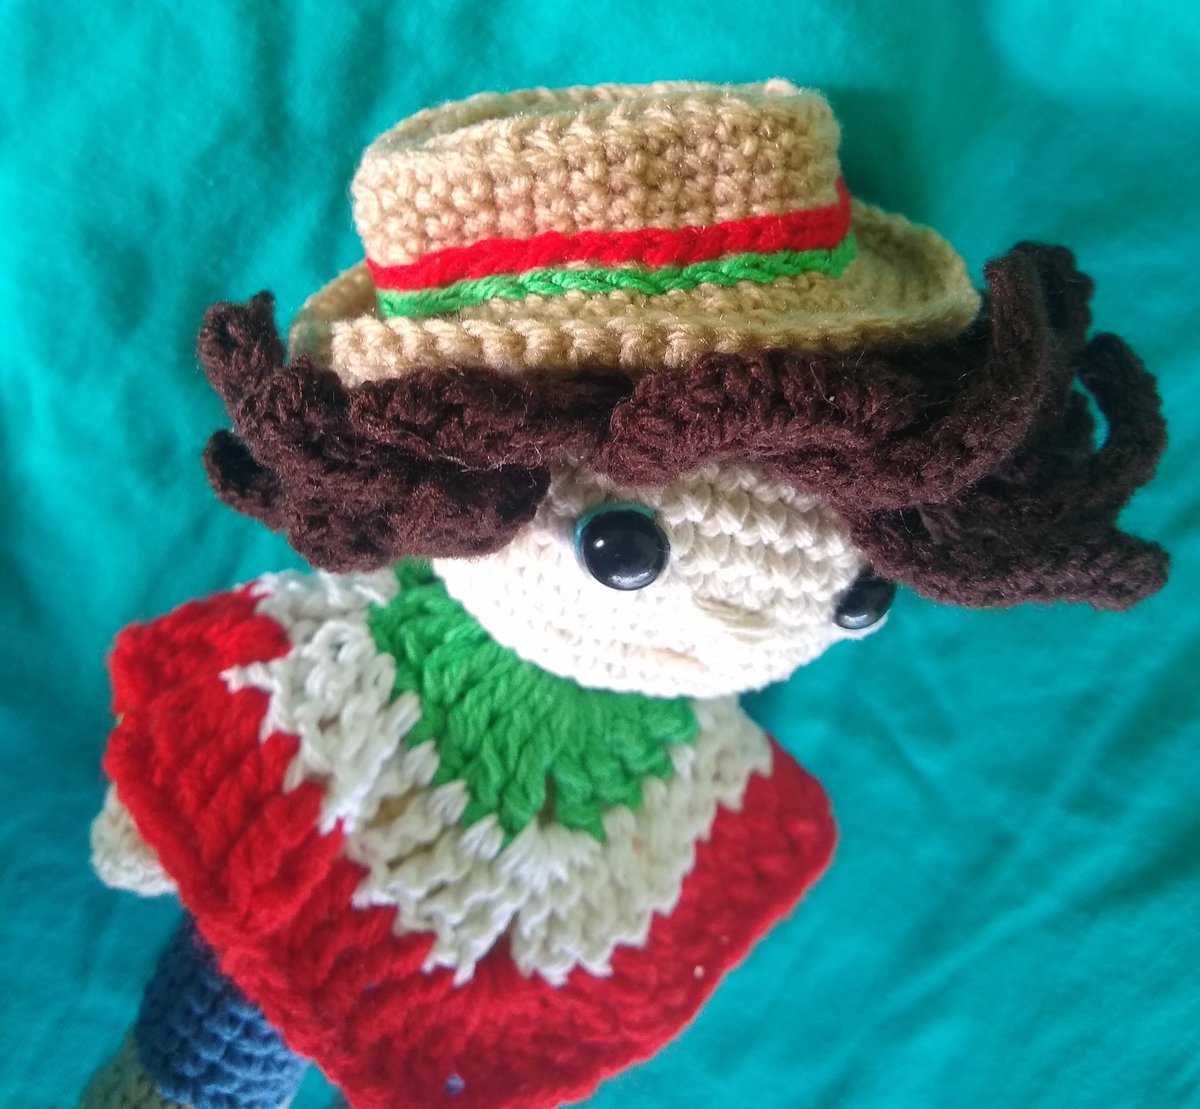 Silvio Gamer, patrón propio!!! 
#AmorGurumis
#ILoveCrochet
#crochet
#handmade
#amigurumis